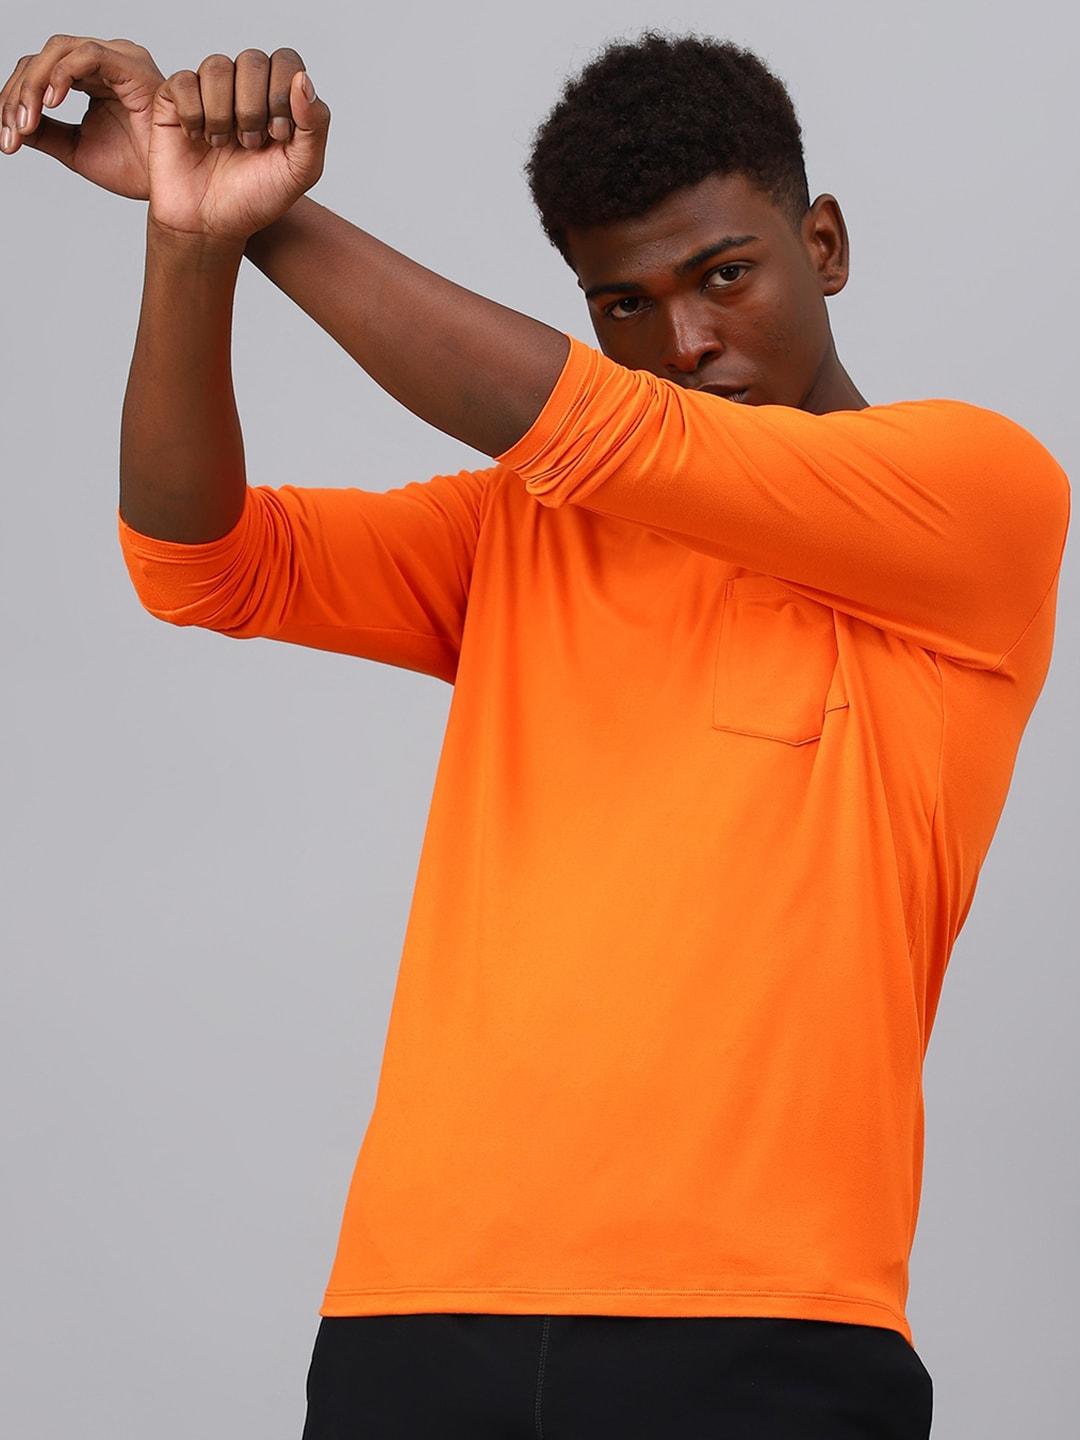 fitkin-men-orange-regular-dri-fit-t-shirt